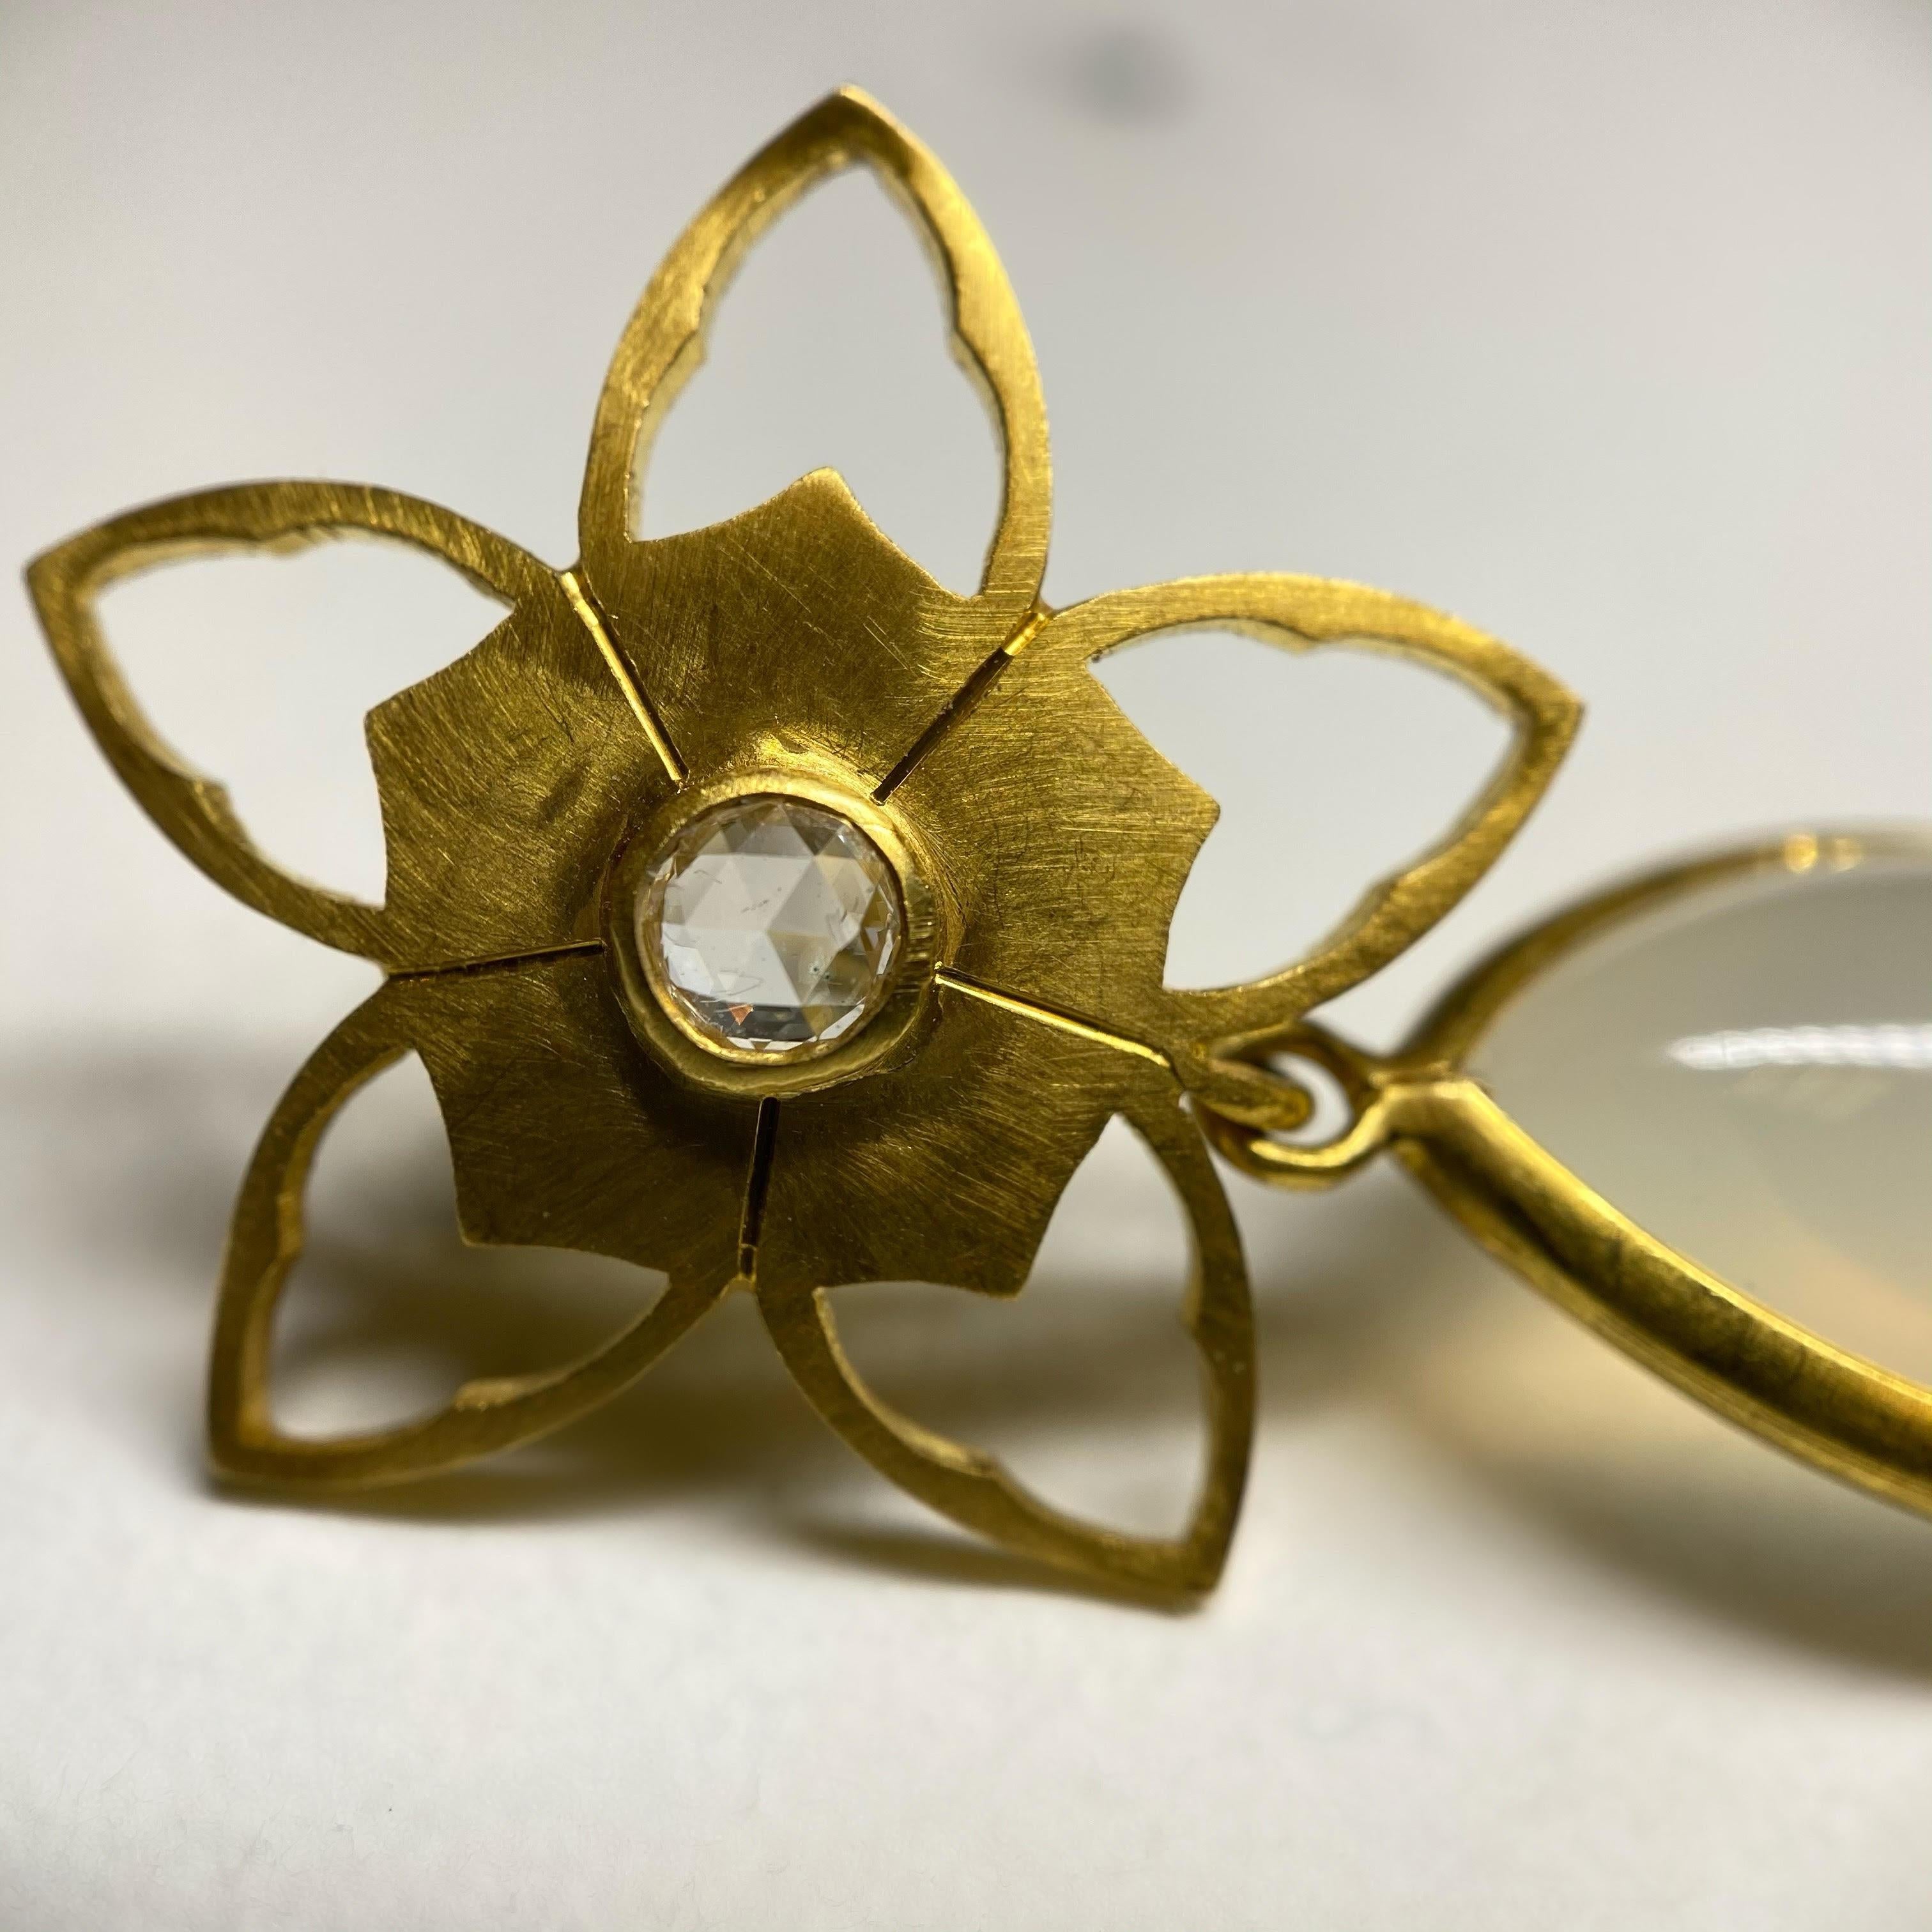 5 Petal Diamond Flower with Detachable Earrings in 18 Karat Gold, A2 by Arunashi For Sale 4